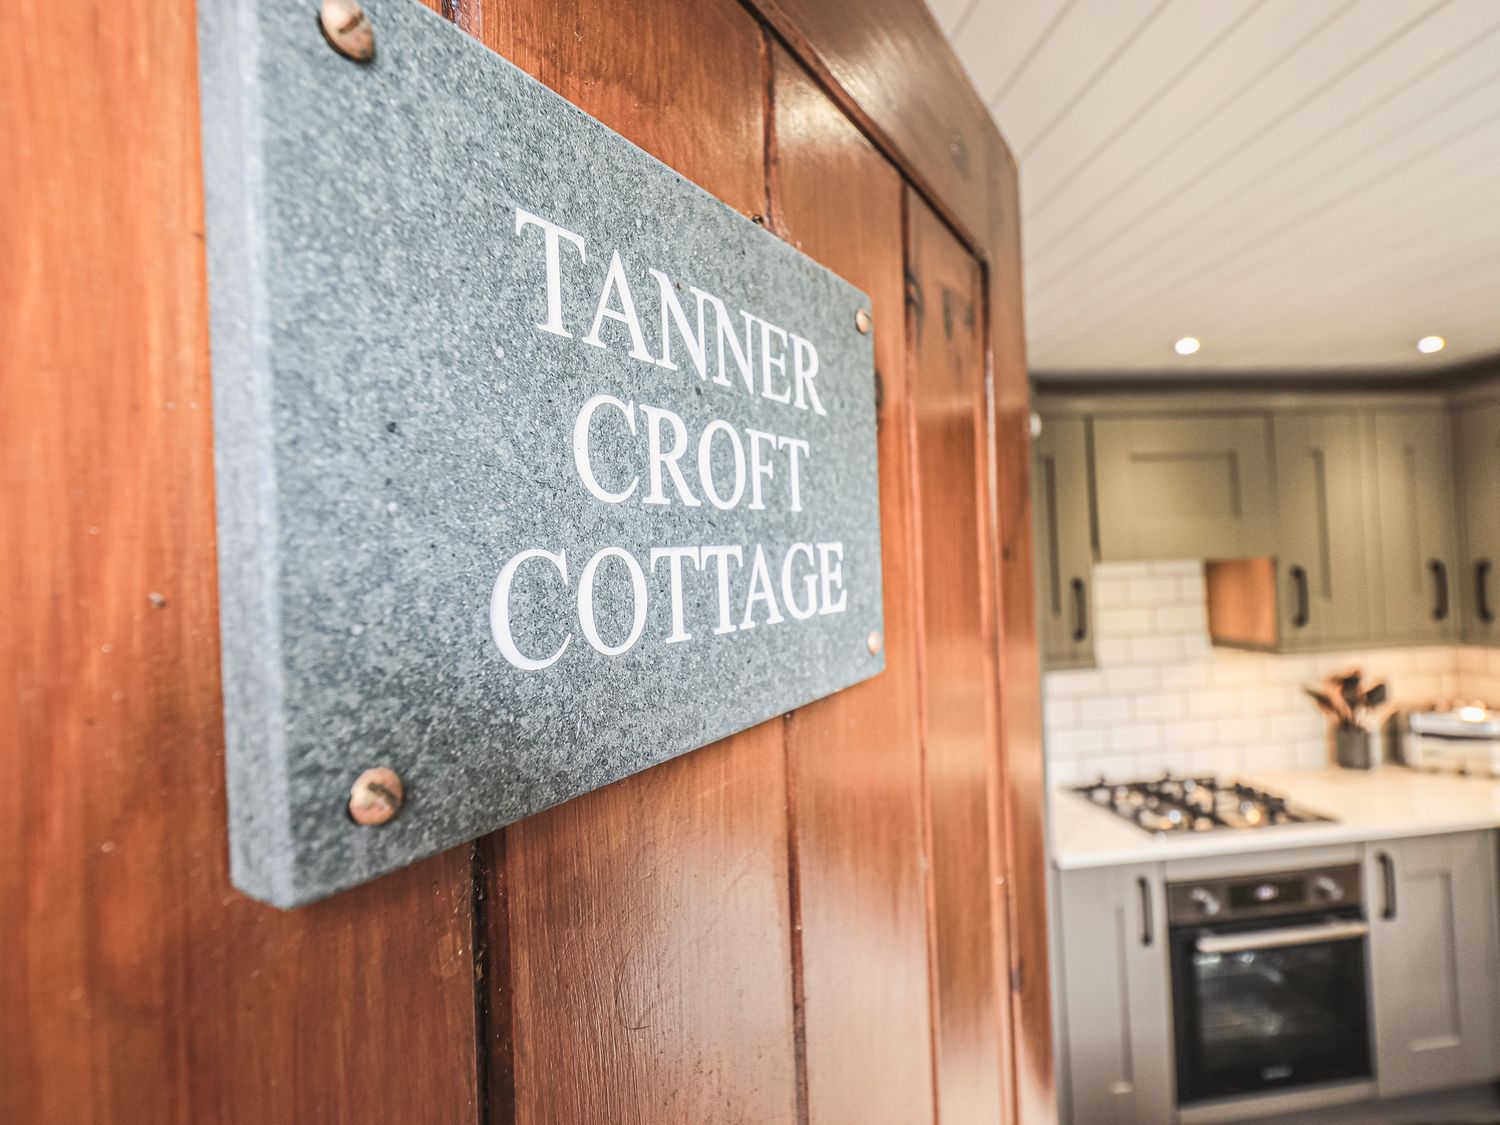 Tanner Croft Cottage, Grasmere